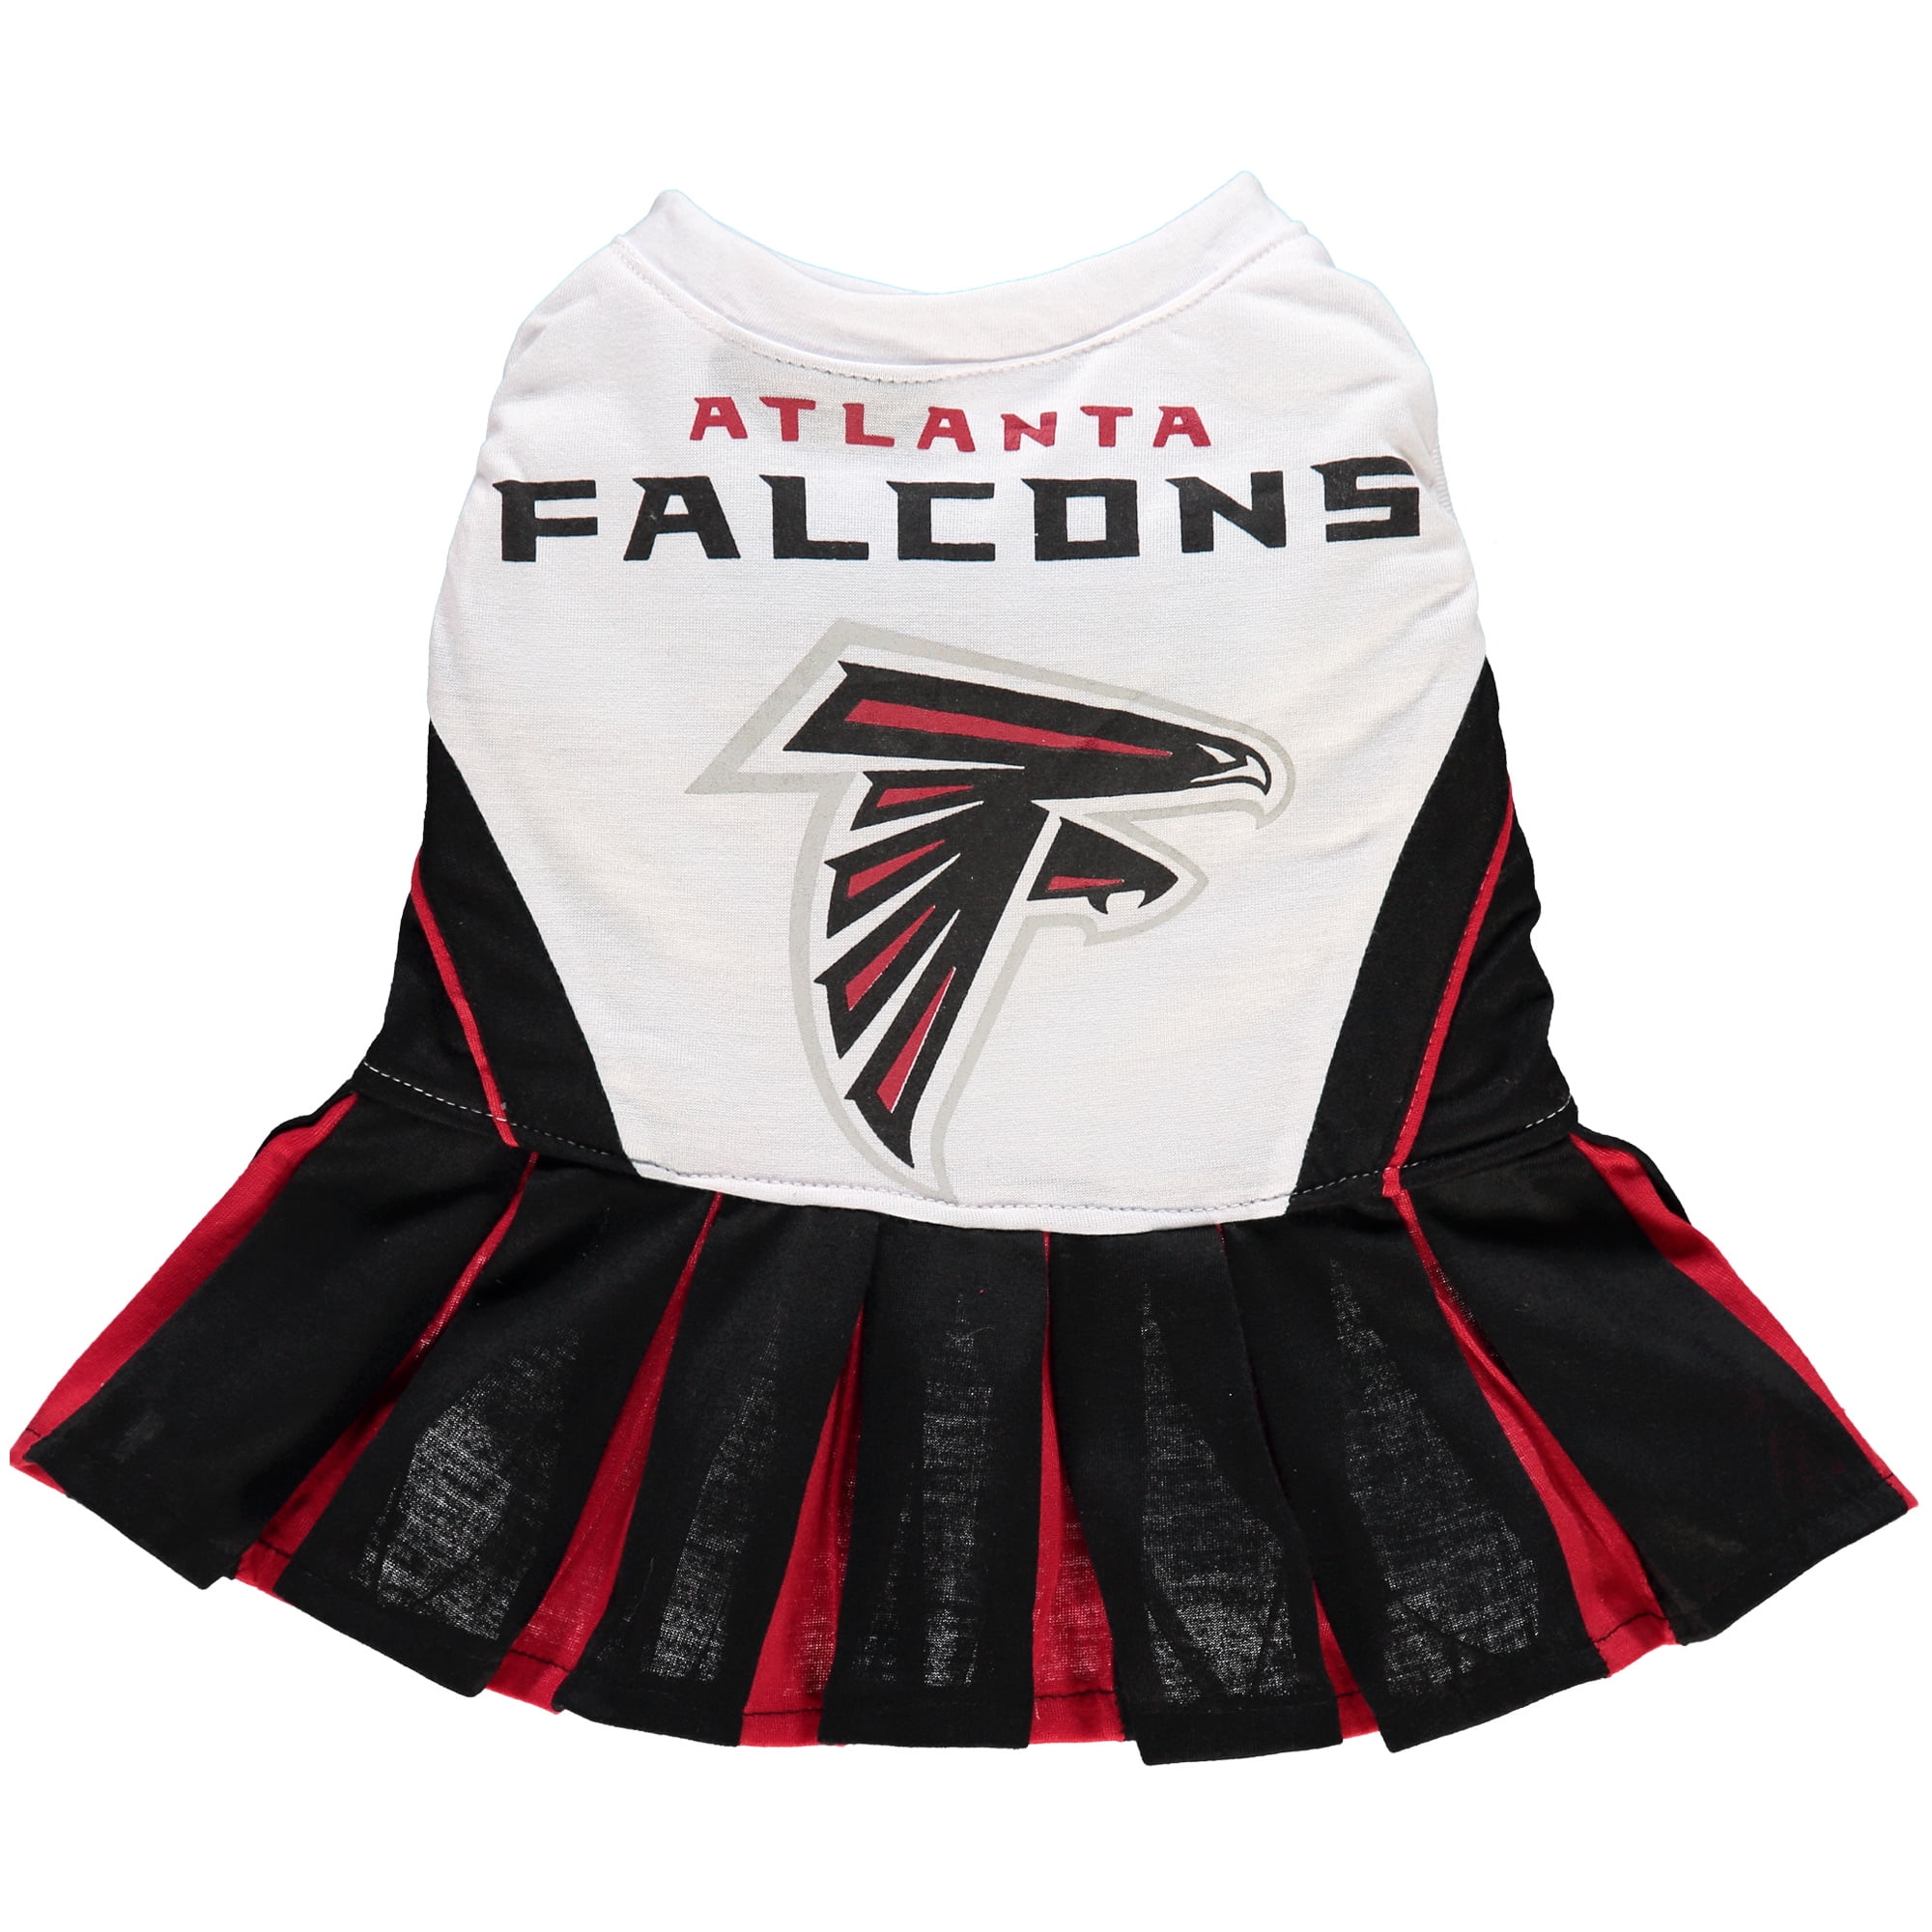 falcons jersey dress